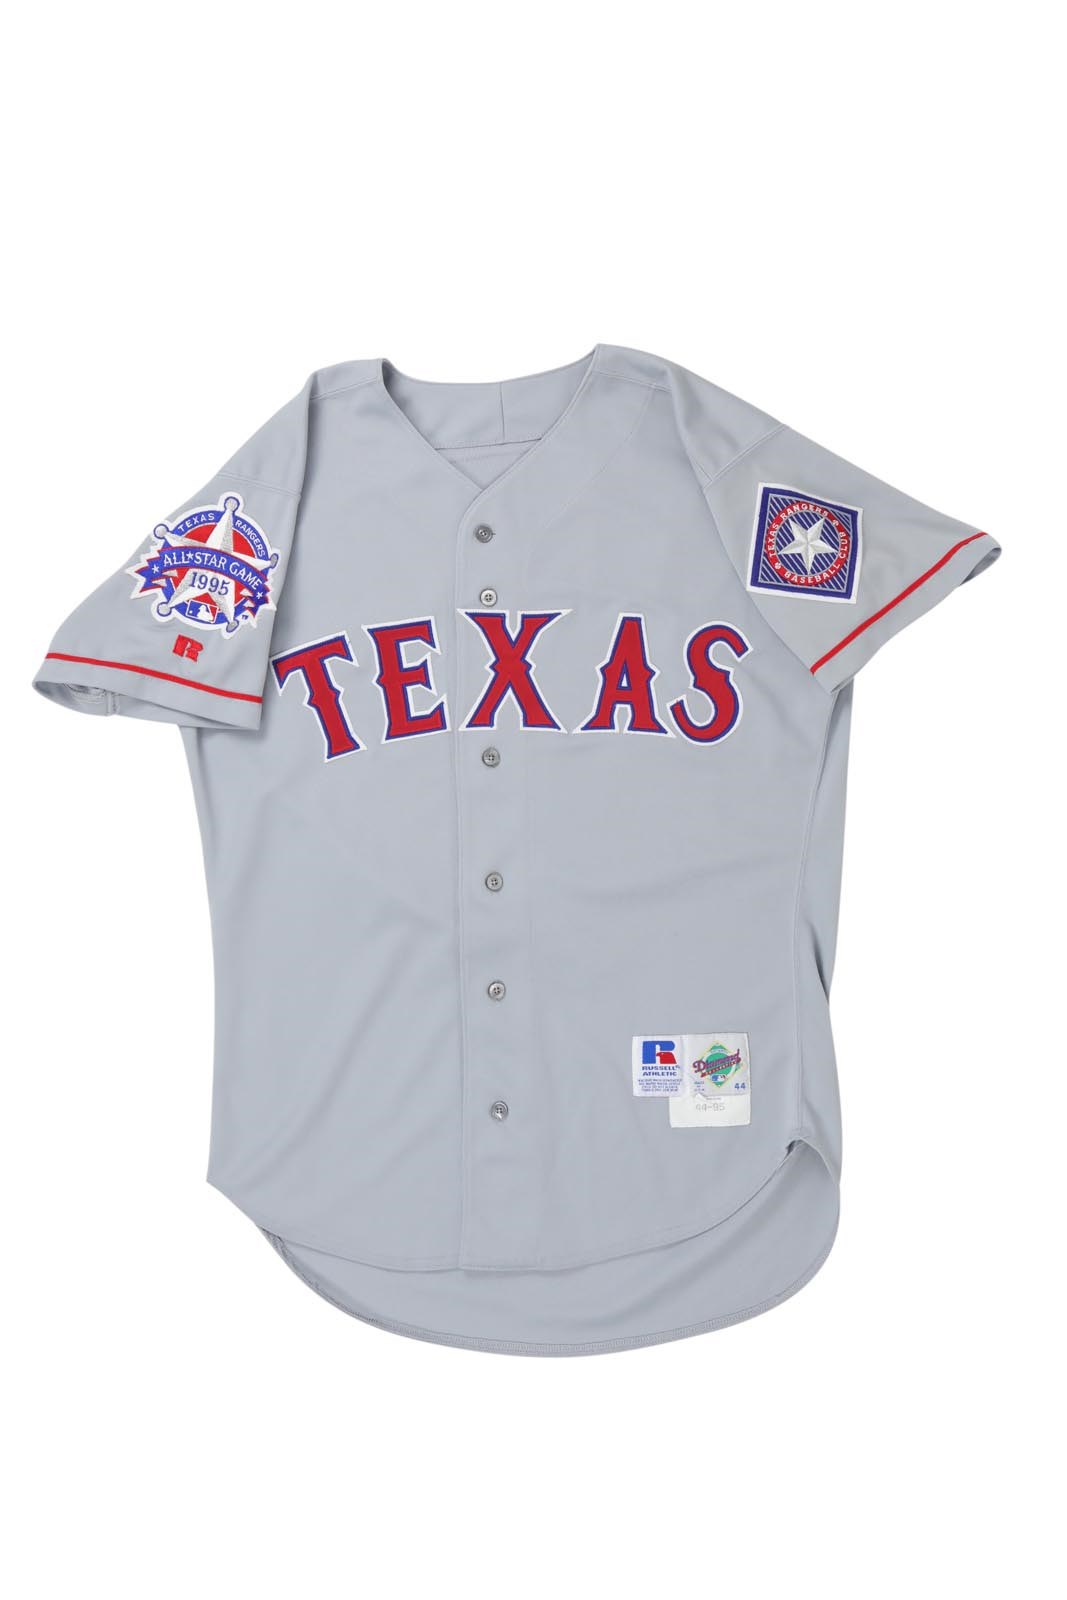 Baseball Equipment - 1995 Wilson Heredia Texas Rangers Game Worn Jersey - All Star Game Patch